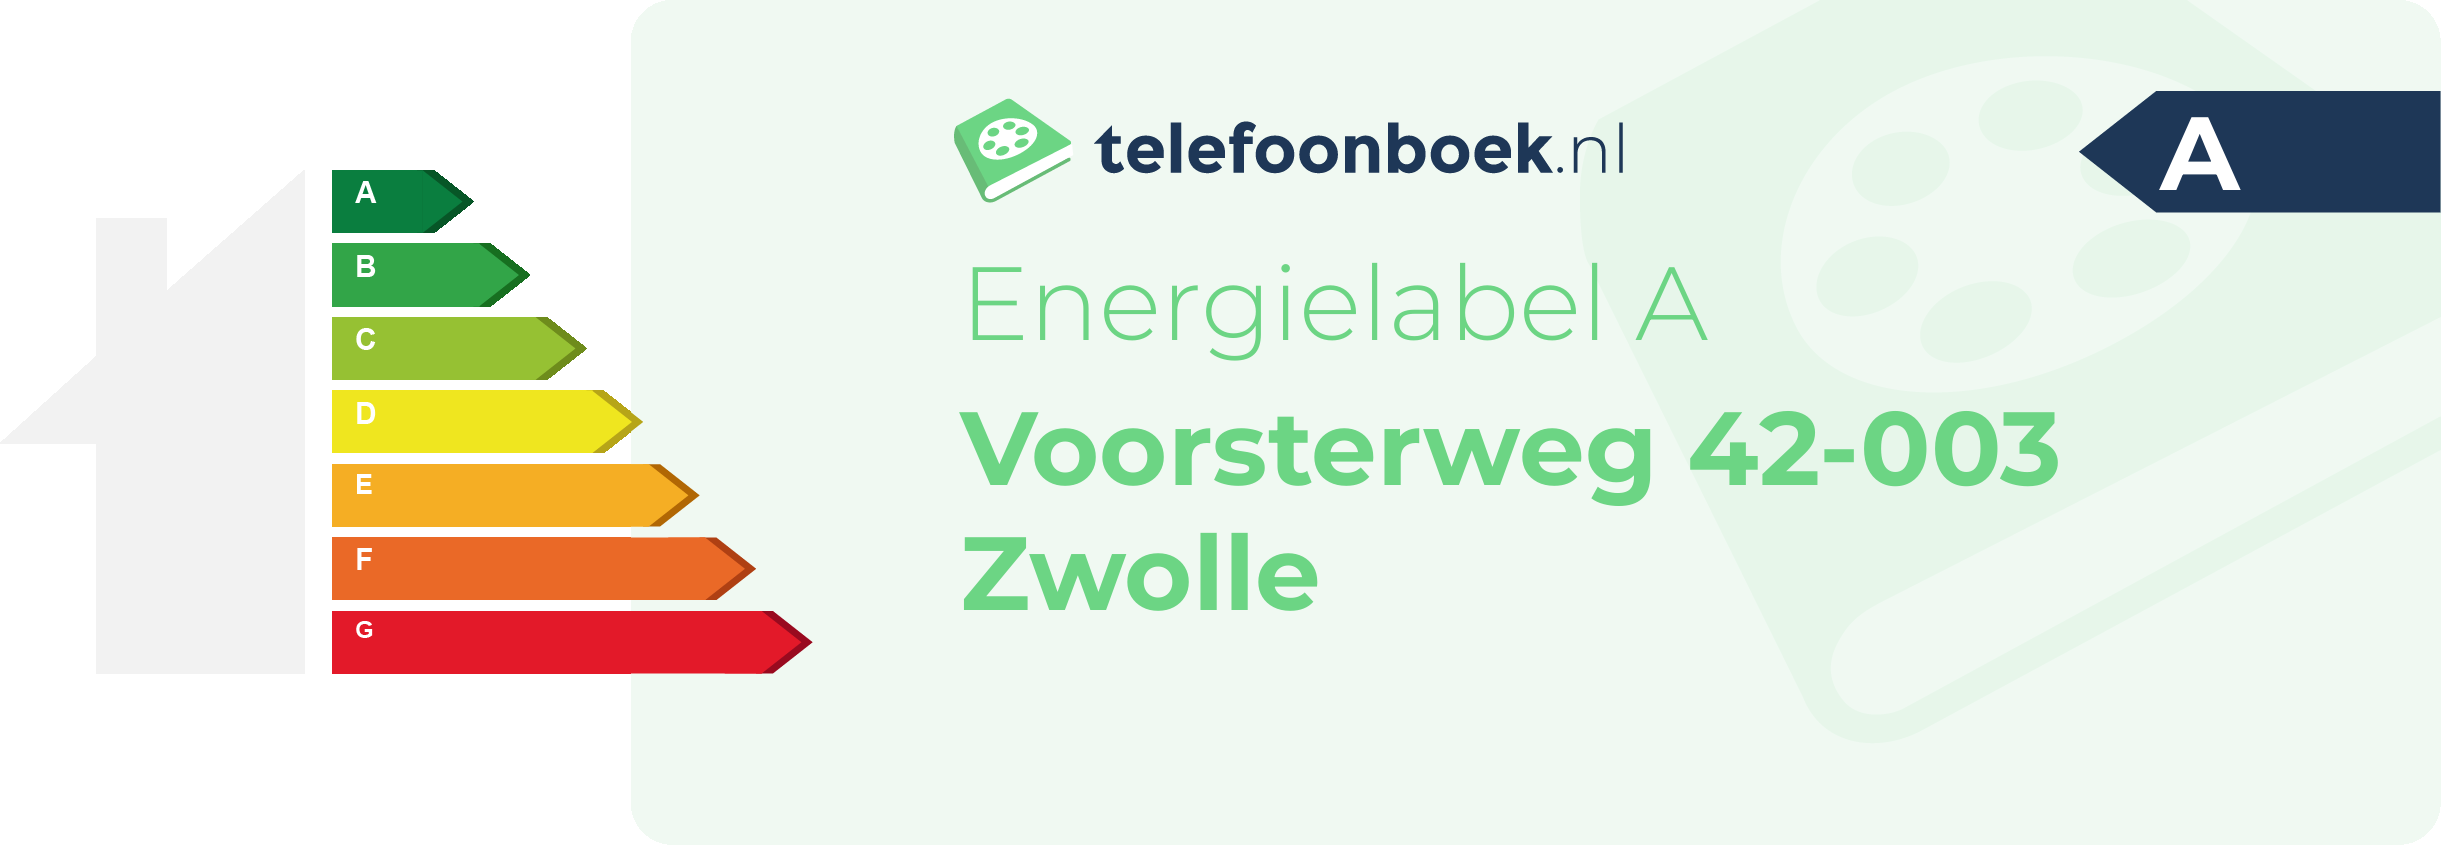 Energielabel Voorsterweg 42-003 Zwolle